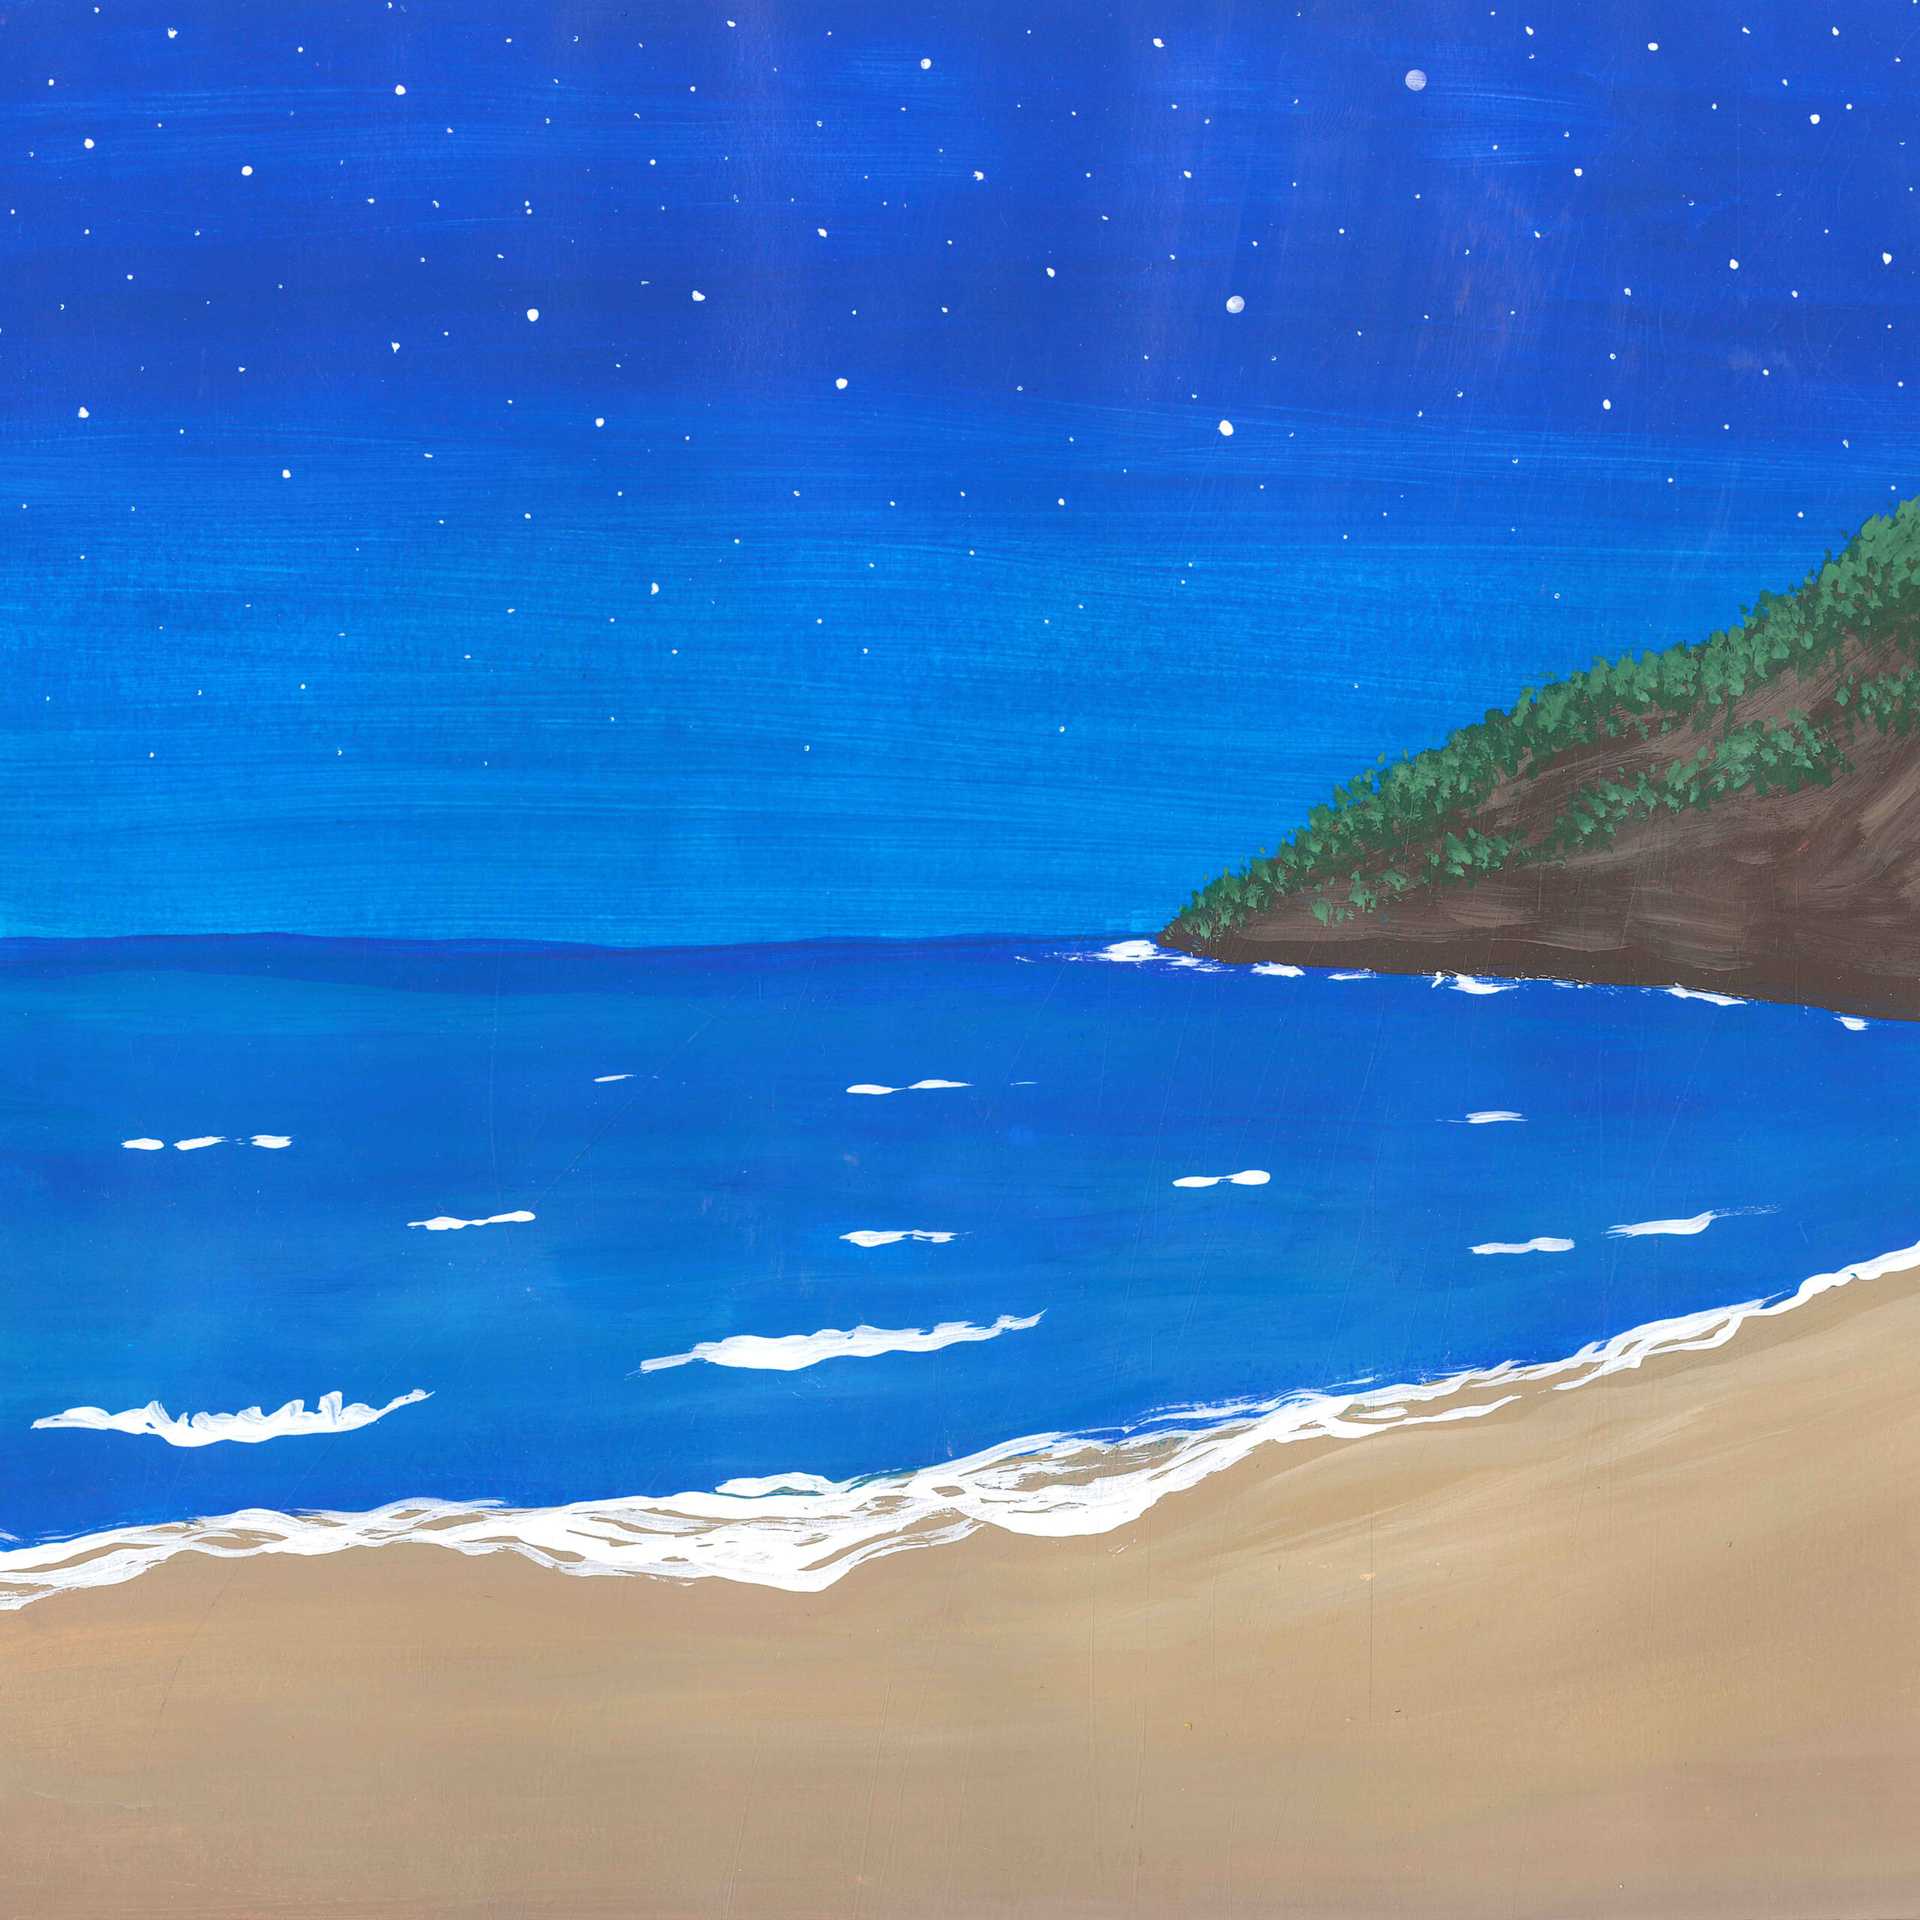 Nightfall Over Gjipe’s Sea - nature landscape painting - earth.fm